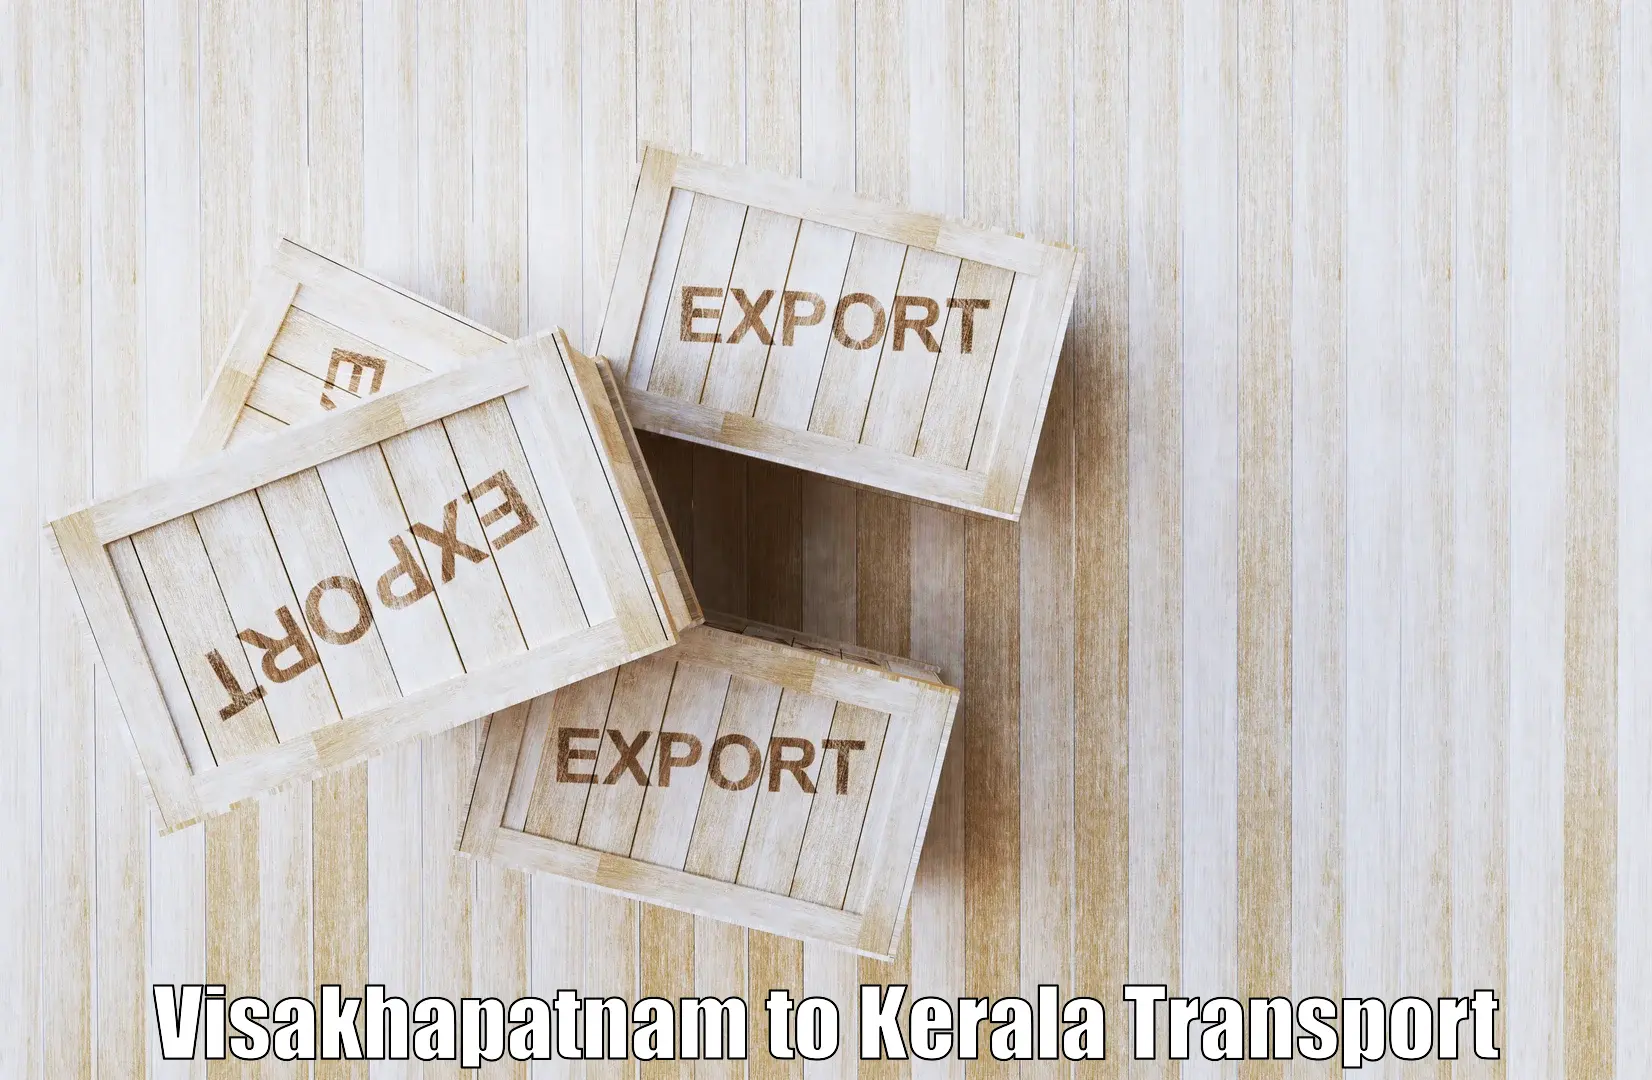 Express transport services Visakhapatnam to Kottayam